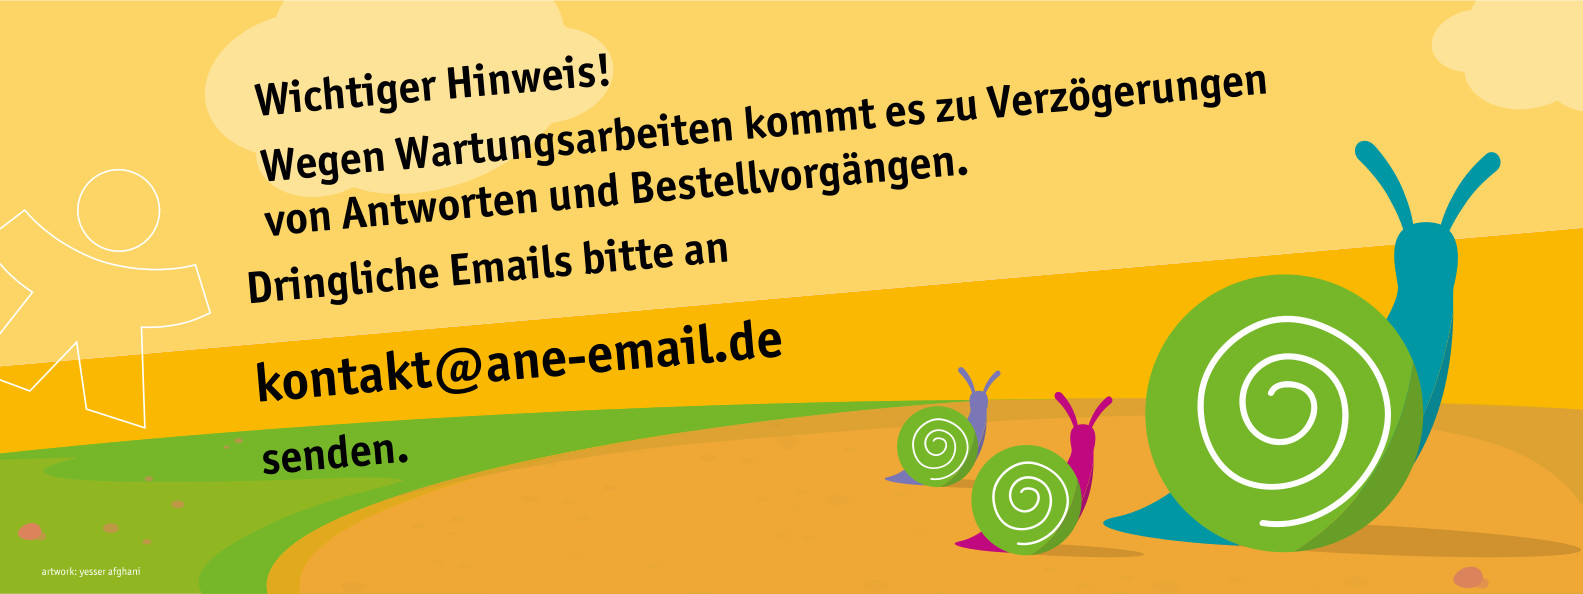 E-Mails bitte an kontakt@ane-email.de